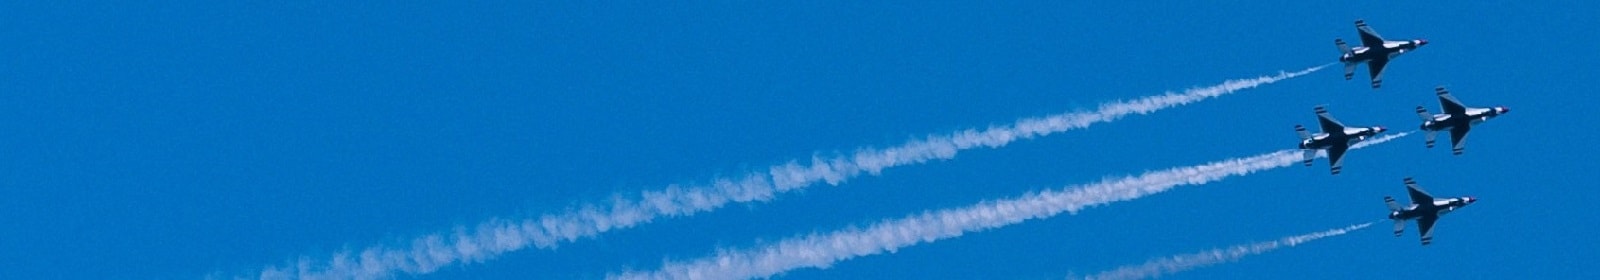 Four jets flying across a blue sky